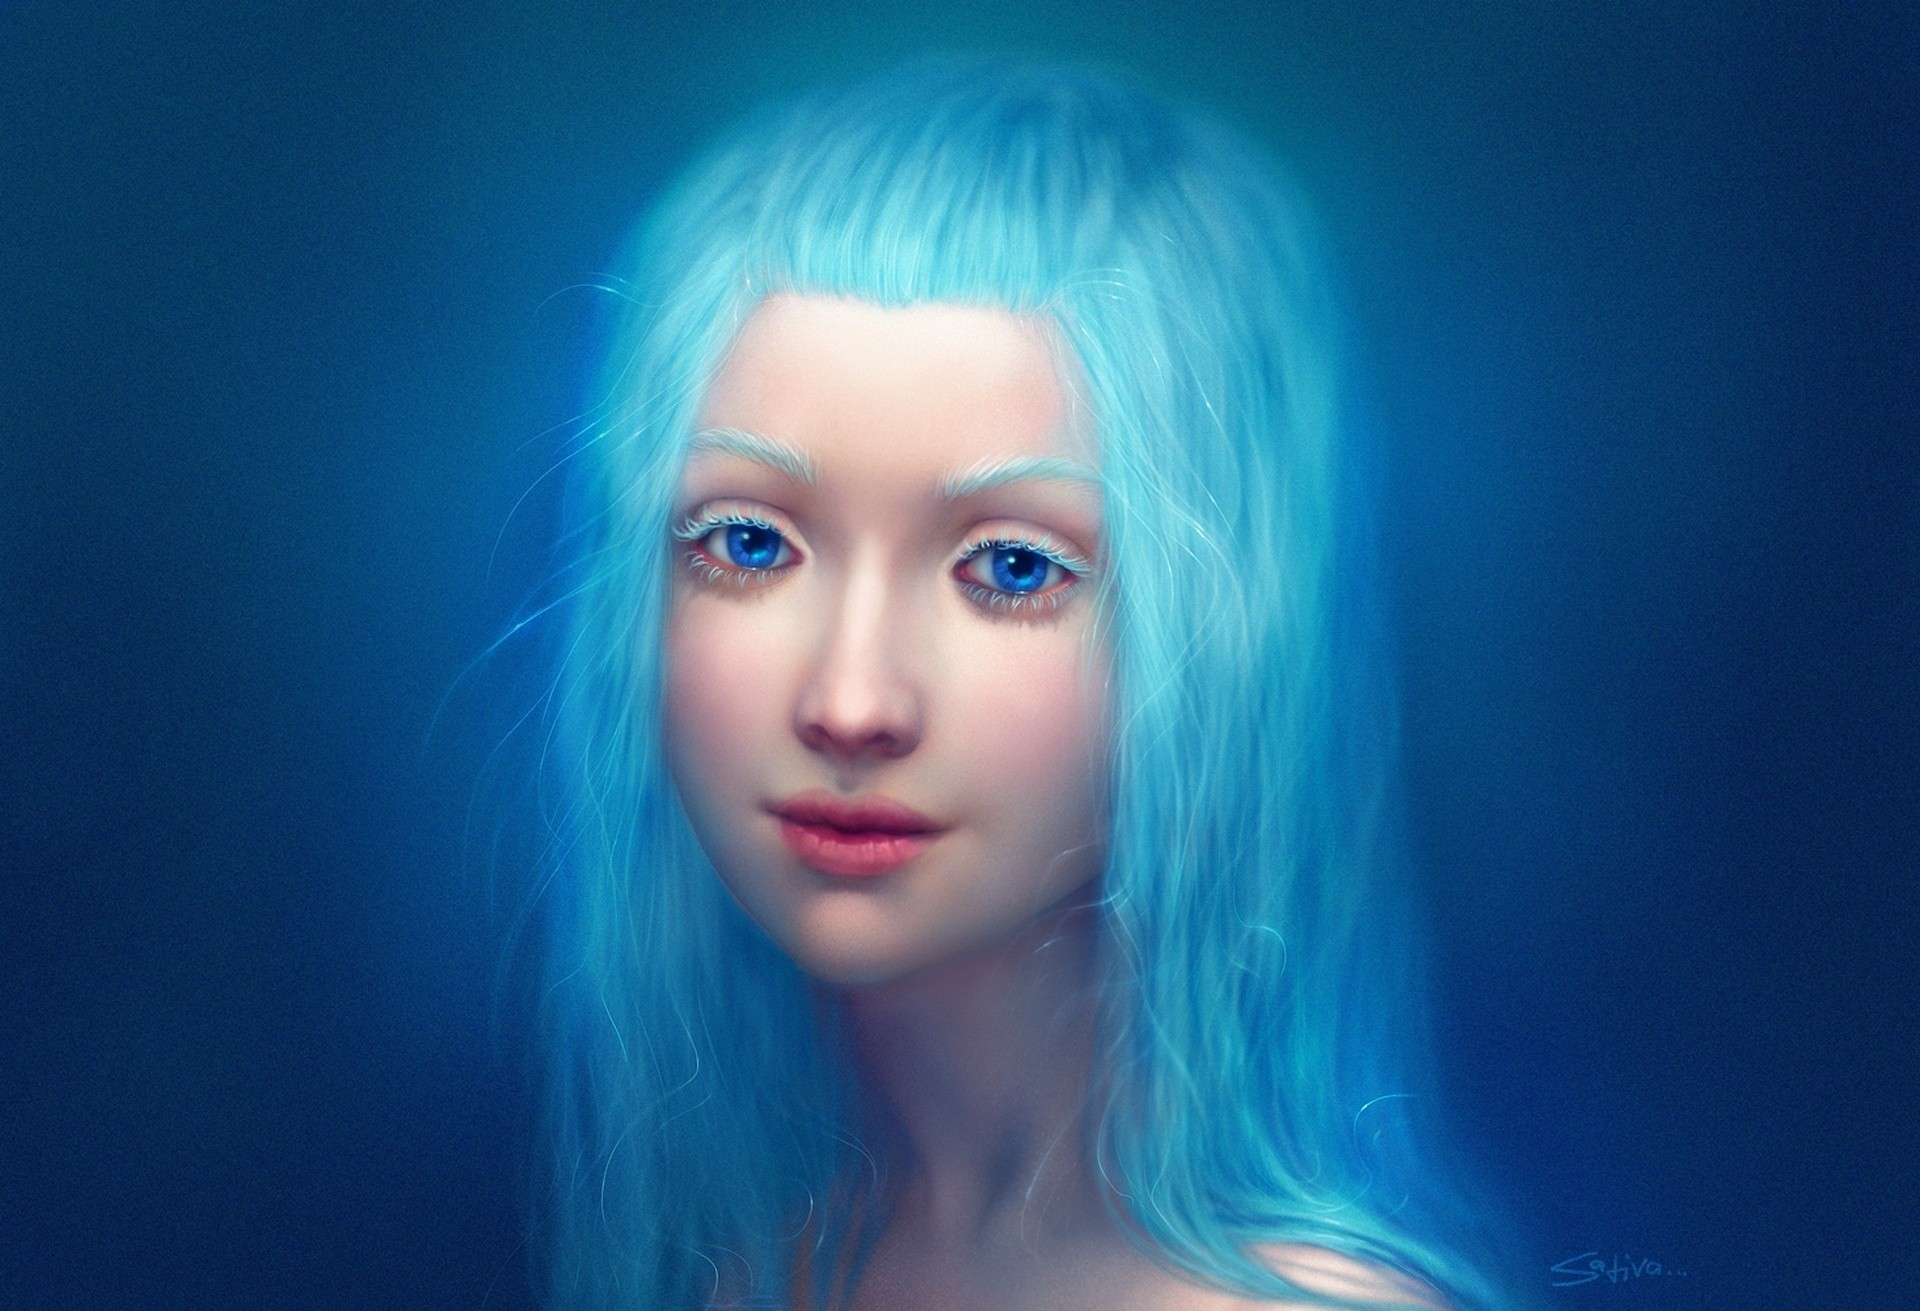 General 1920x1311 women blue hair fantasy girl portrait face digital art watermarked simple background